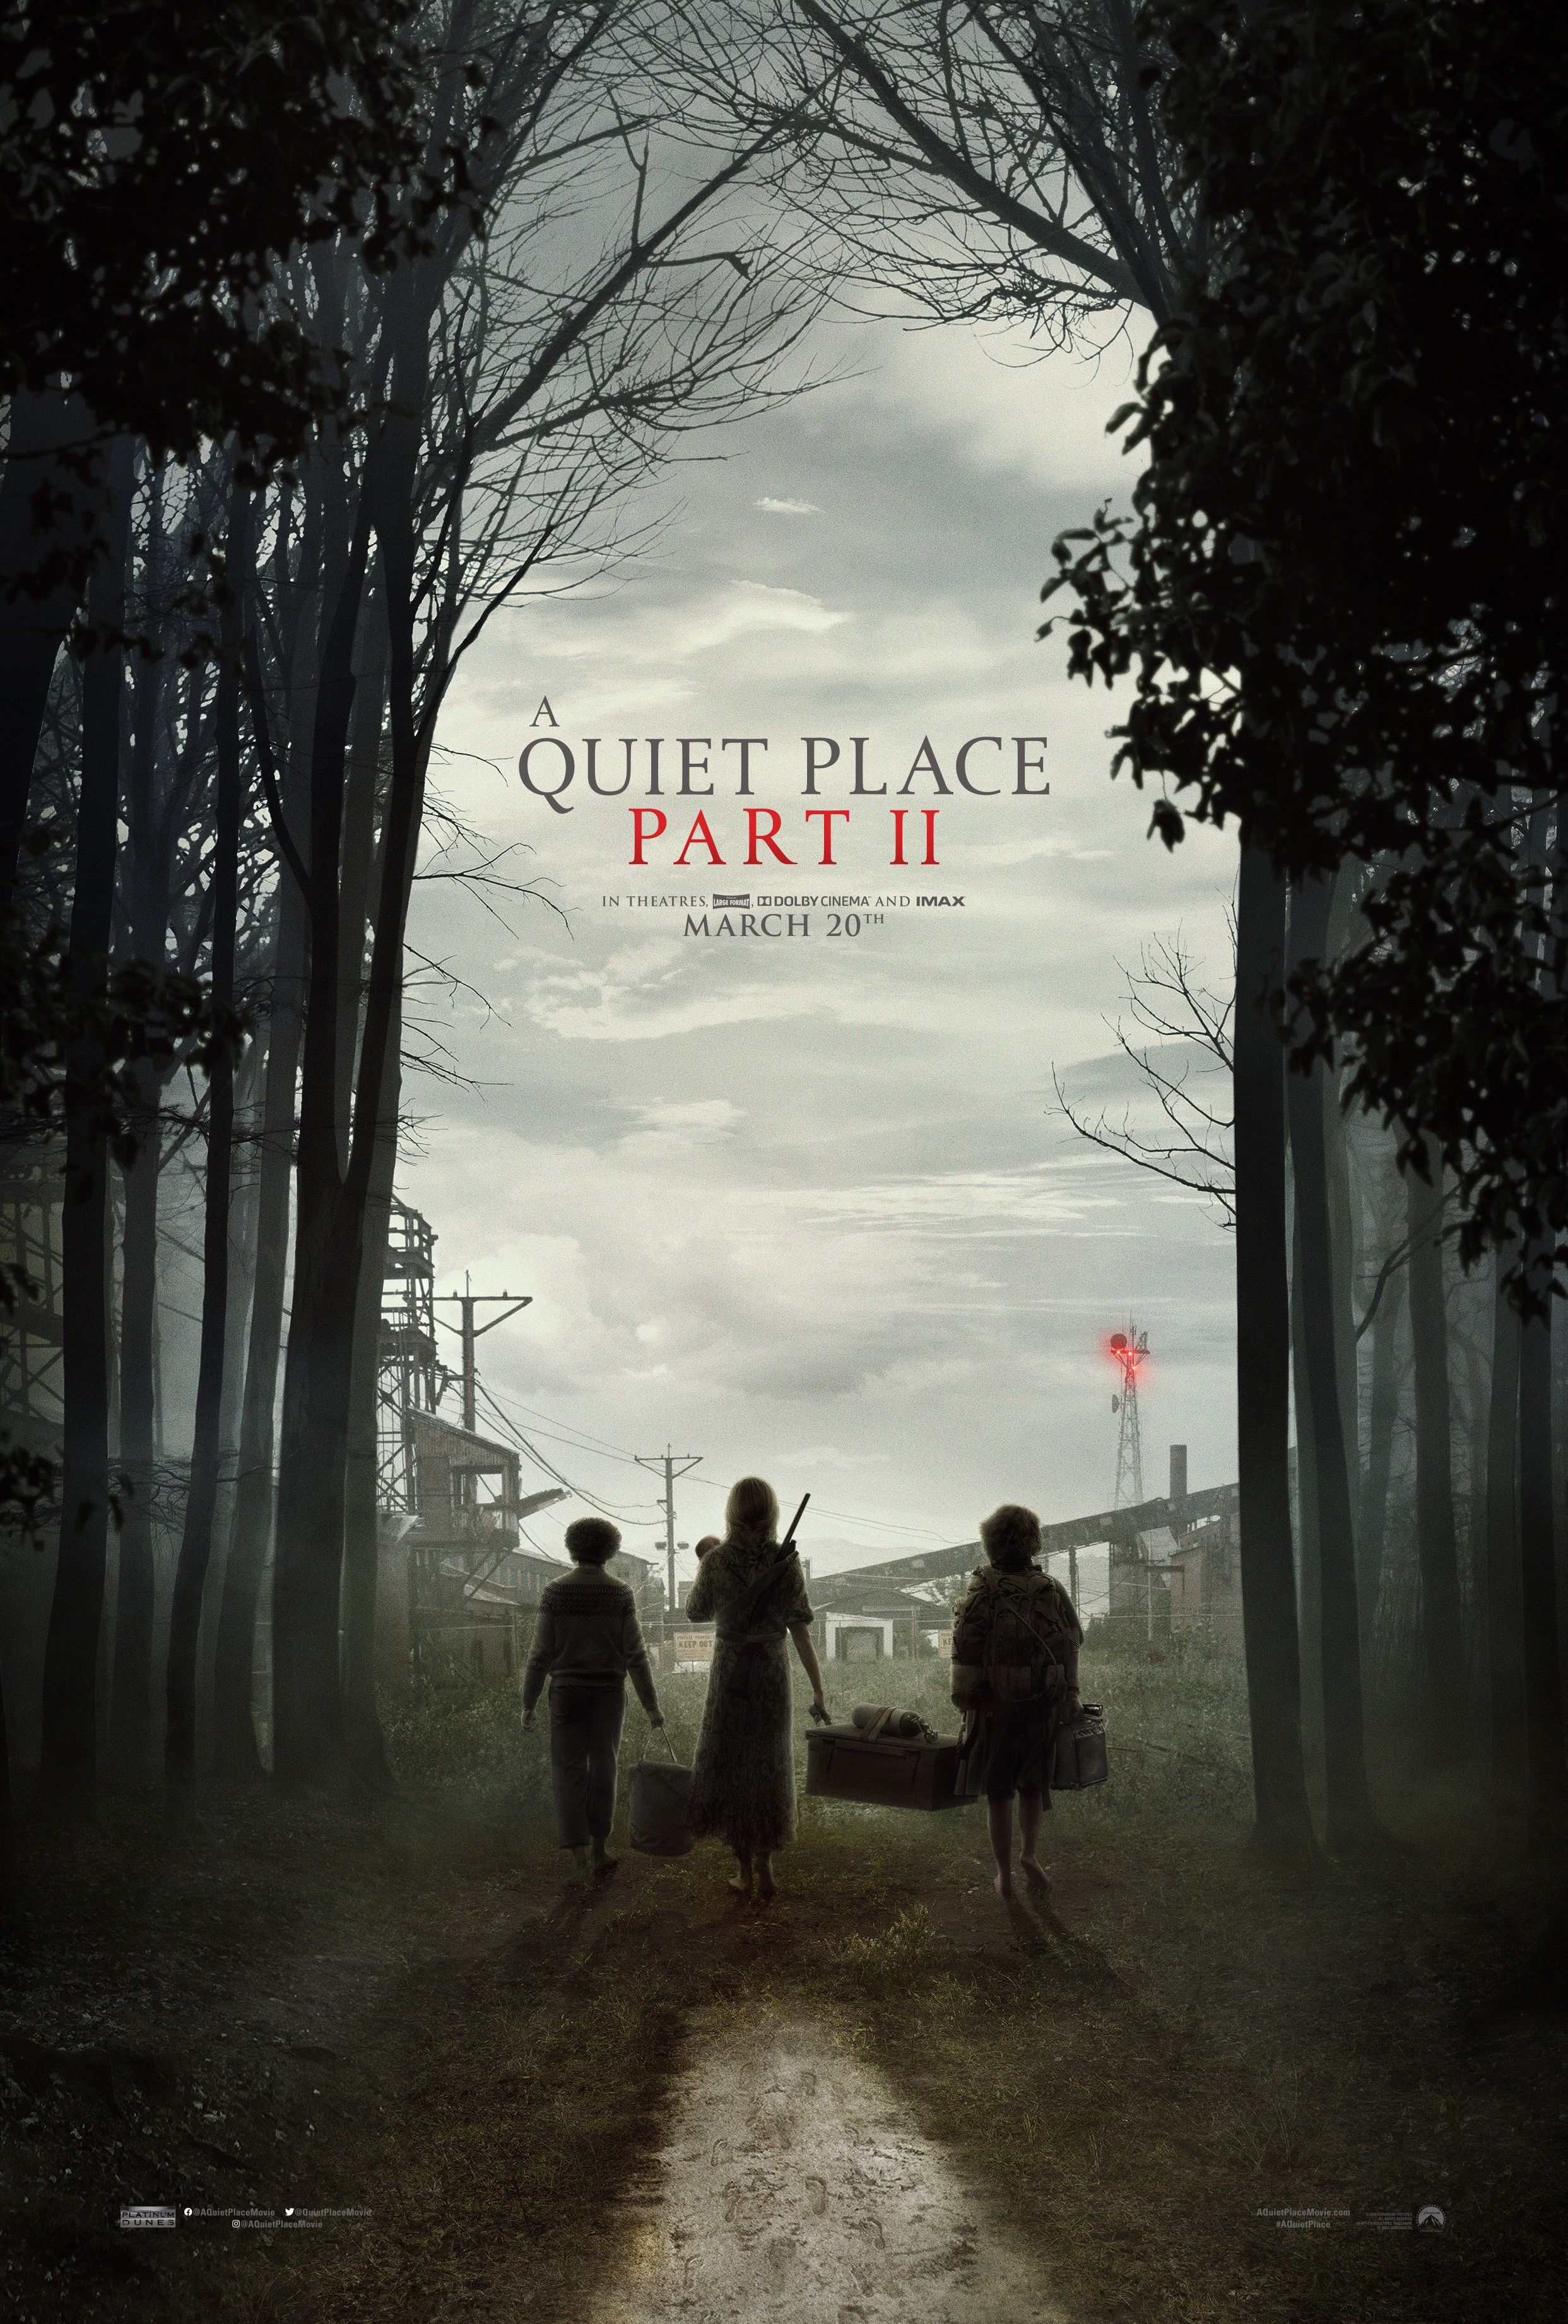 Quiet Place 2 Release Date Delayed Indefinitely, Confirms John Krasinski